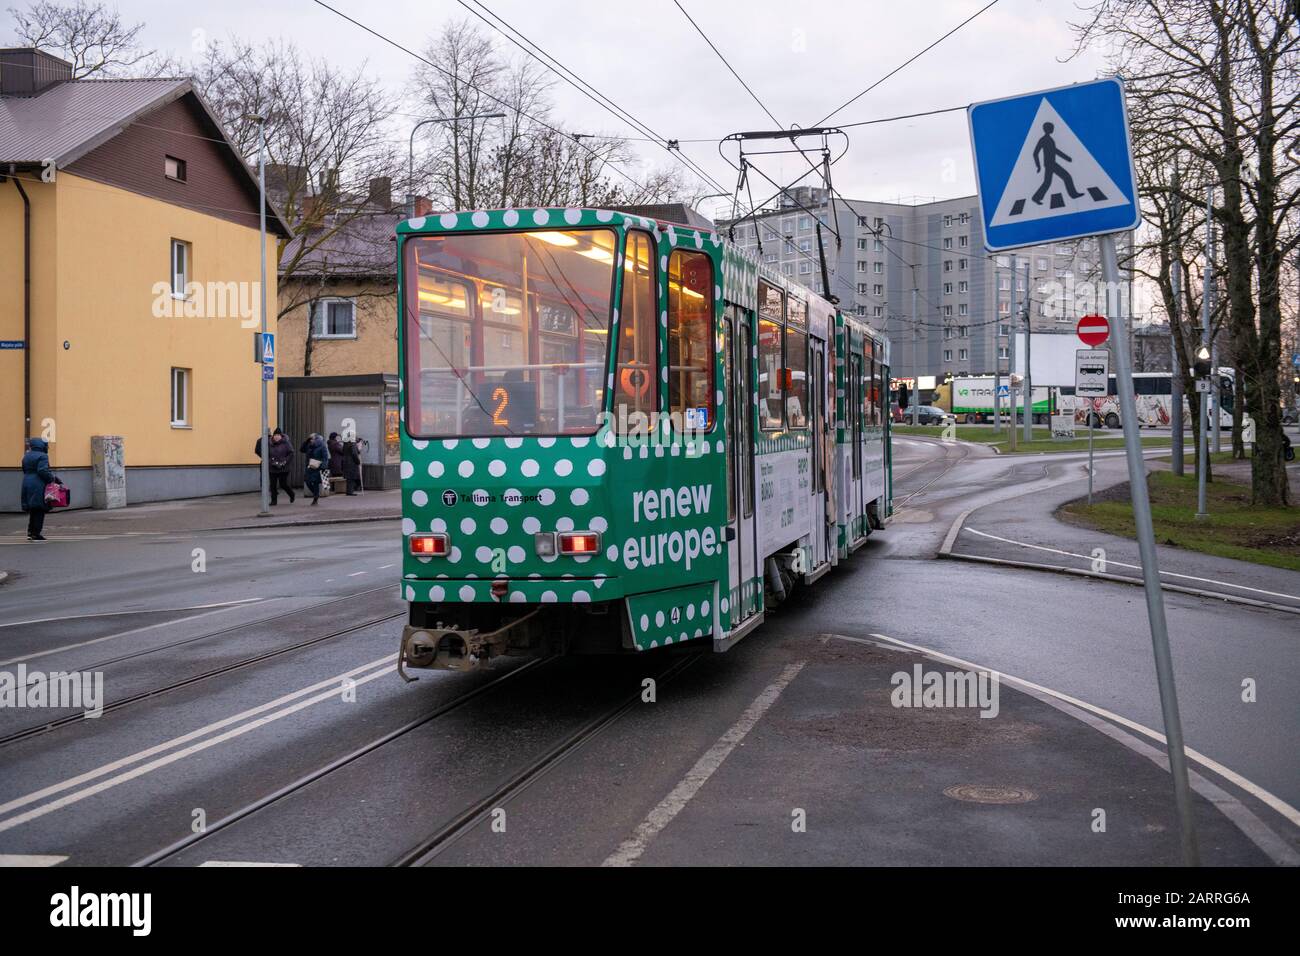 Electric Tram carrying 'Renew Europe' signage. Tallinn, Estonia Stock Photo